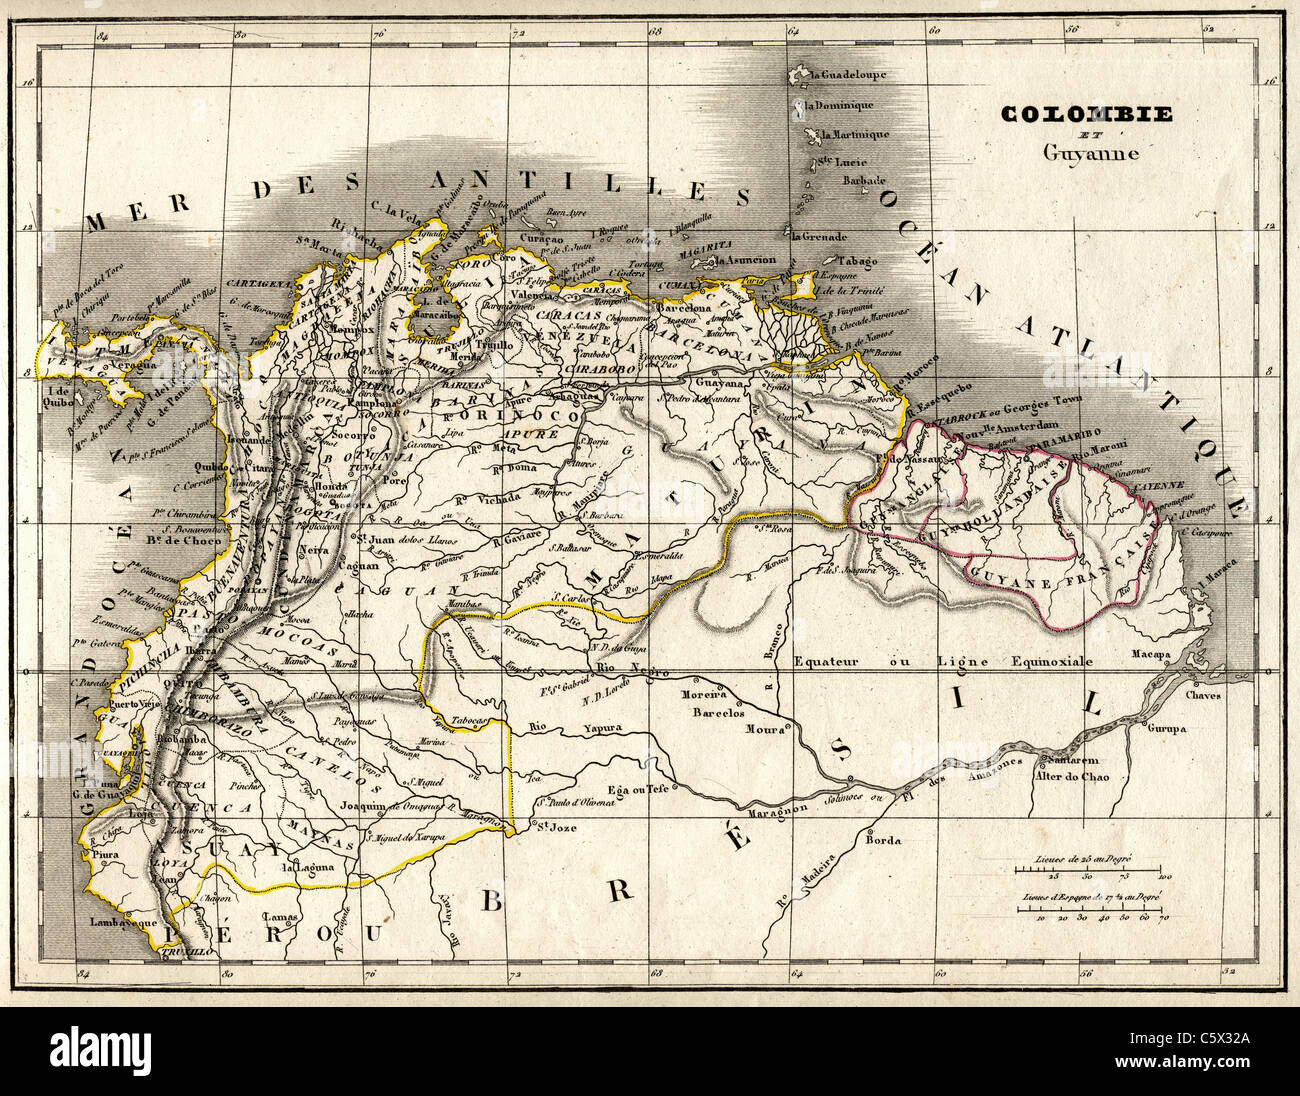 Colombie et Guyanne (Colombia e Guyana) Mappa antiquario da 'Atlas Universel de Geographie Ancienne e Moderne' dal cartografo C. V. Monin Foto Stock